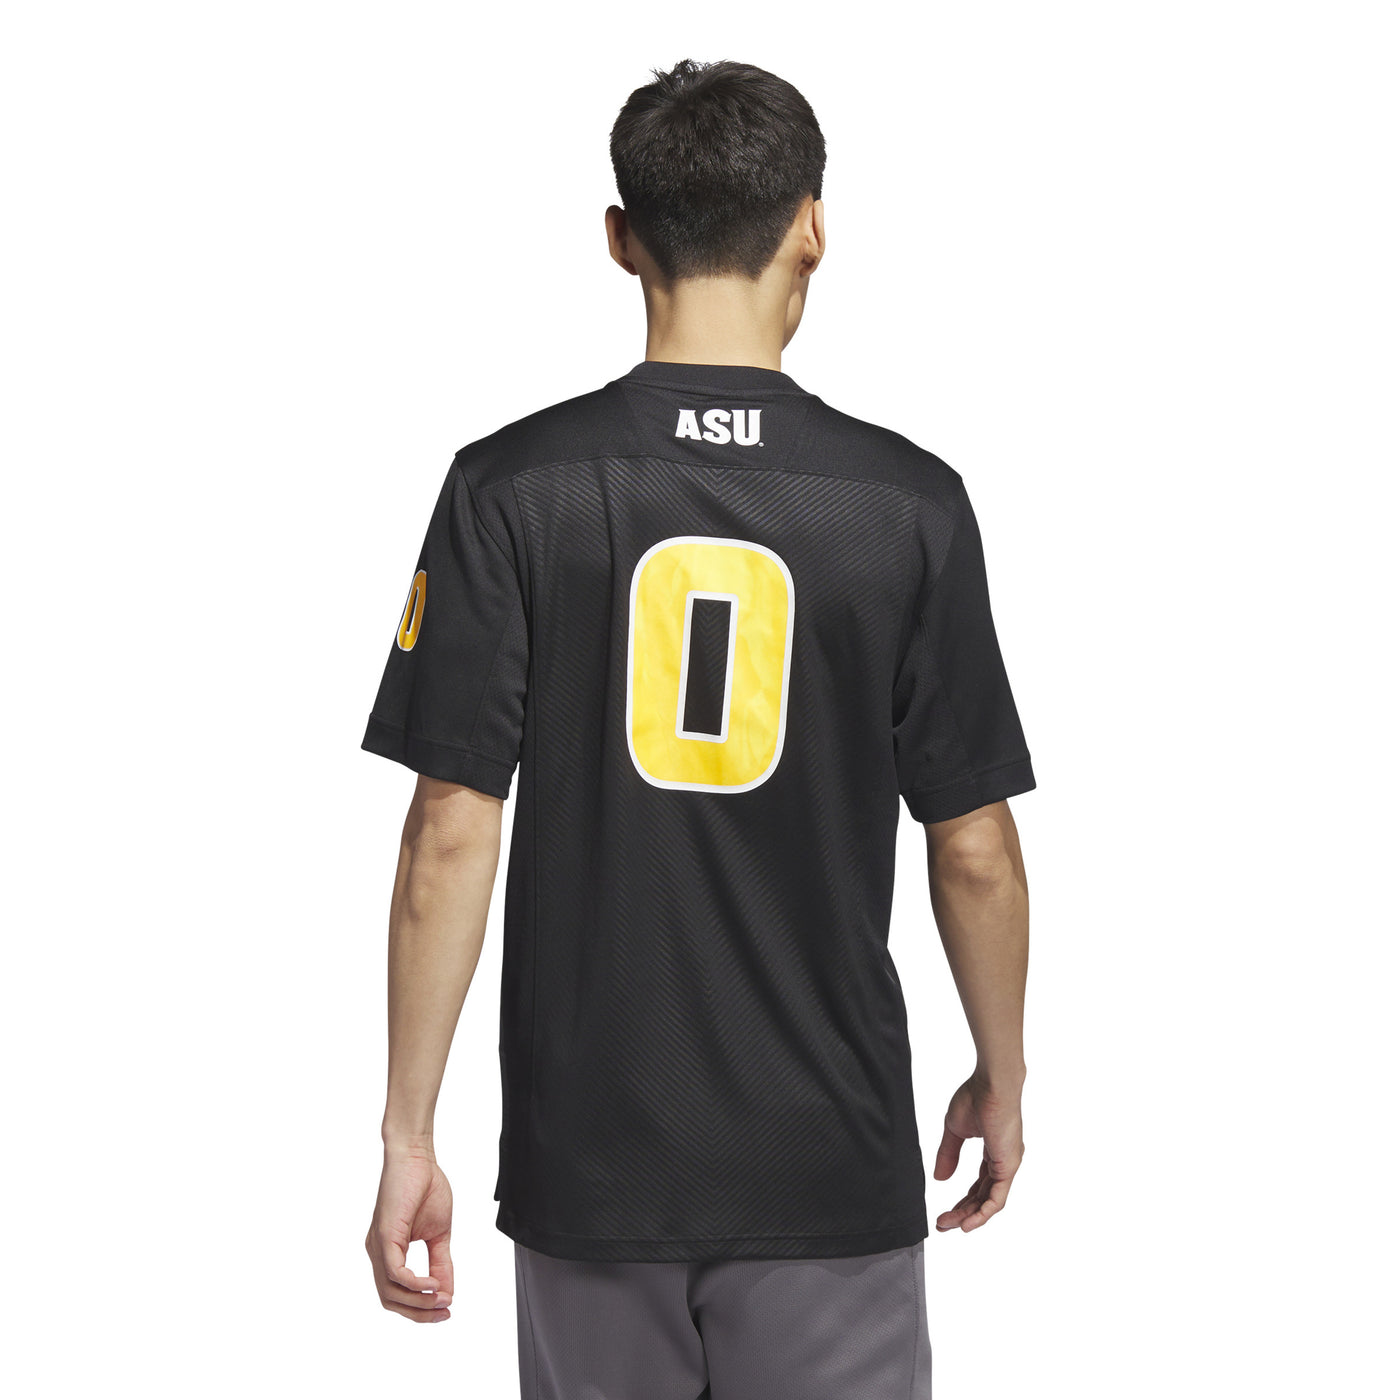 Backside of ASU black football jersey including 